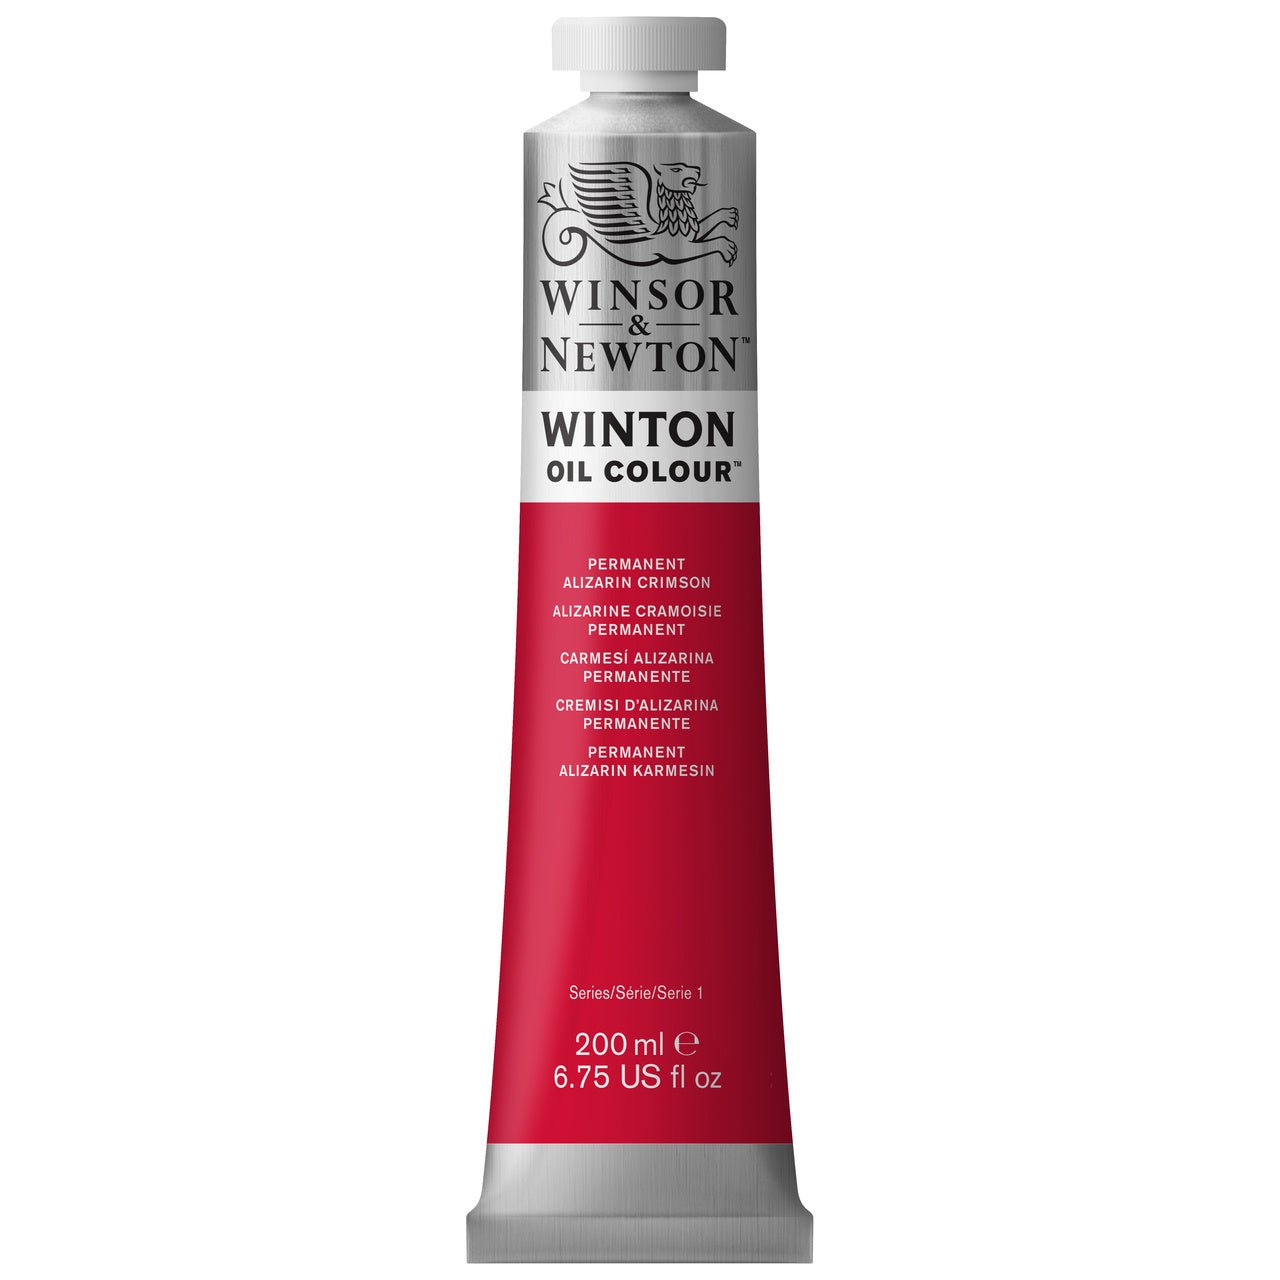 Winsor & Newton Winton Oil Paint - Permanent Alizarin Crimson 200 ml